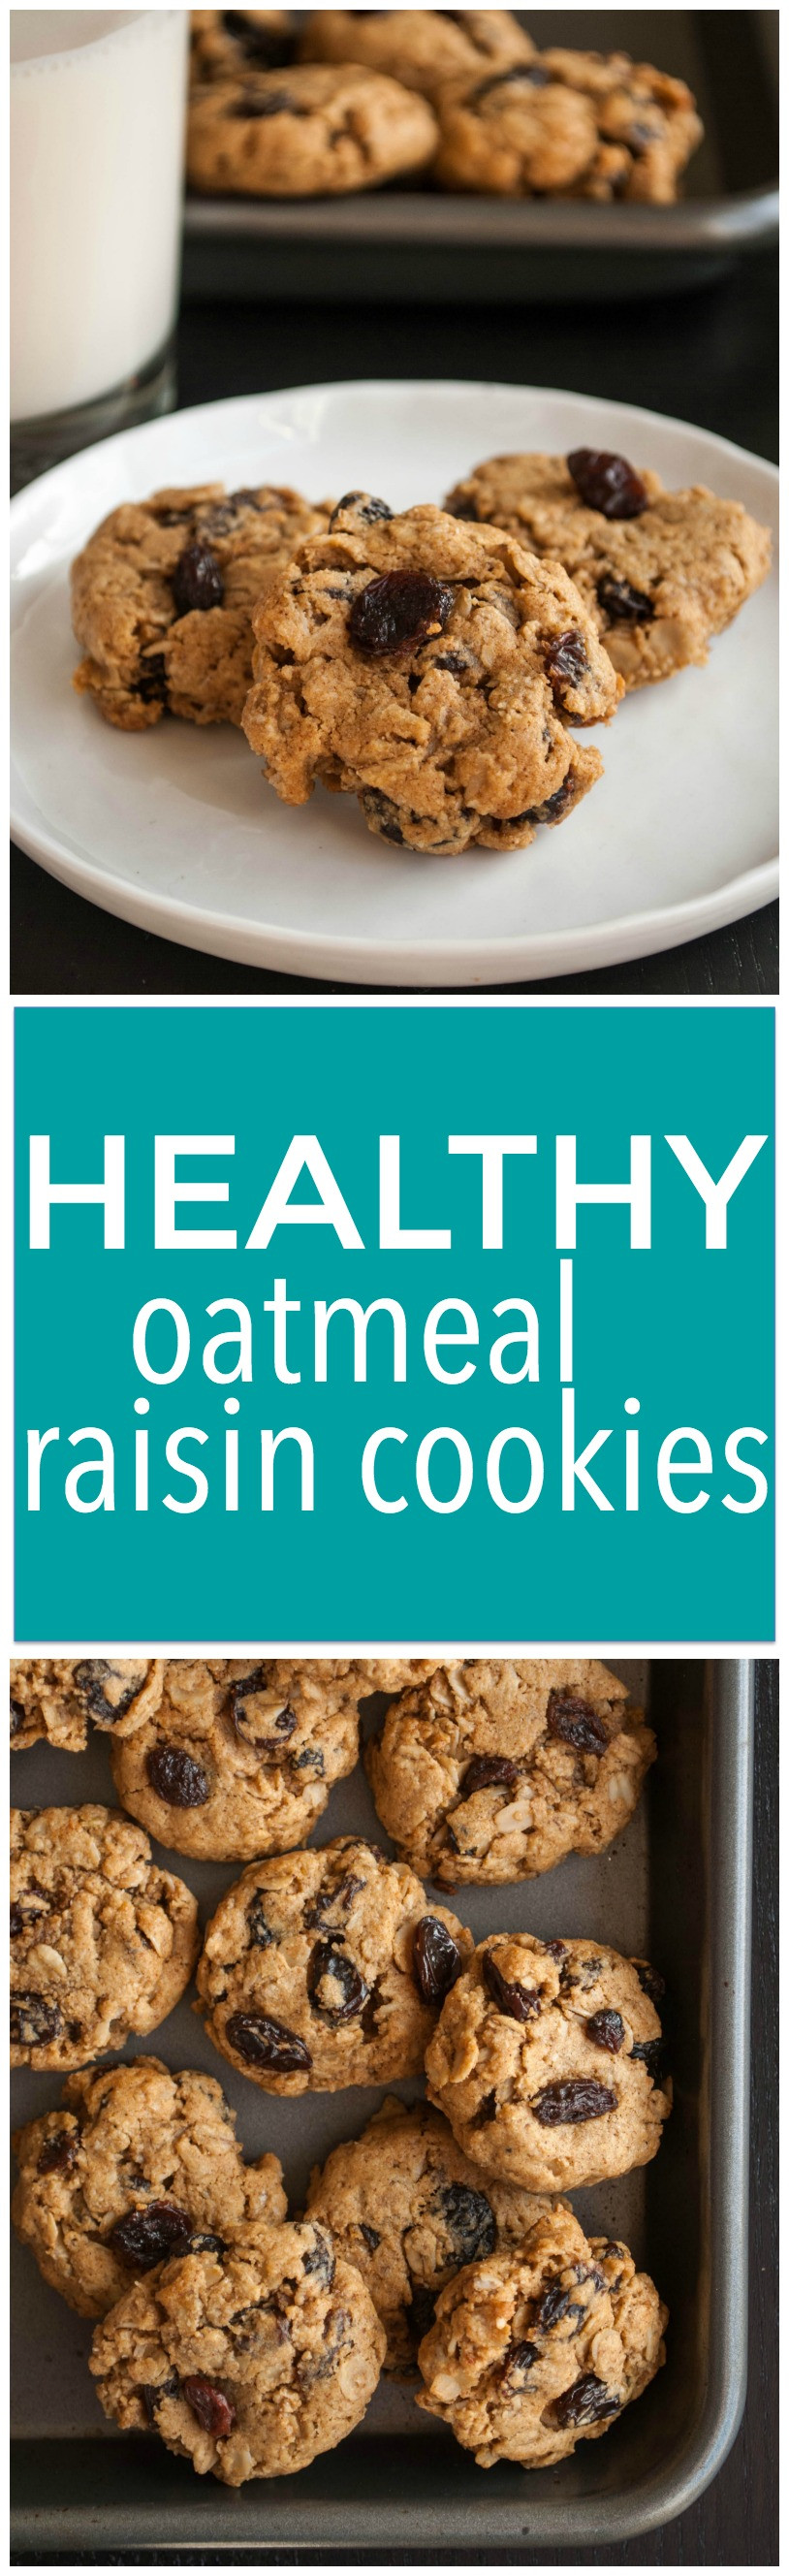 Heart Healthy Oatmeal Cookies 20 Best Heart Healthy Oatmeal Raisin Cookies